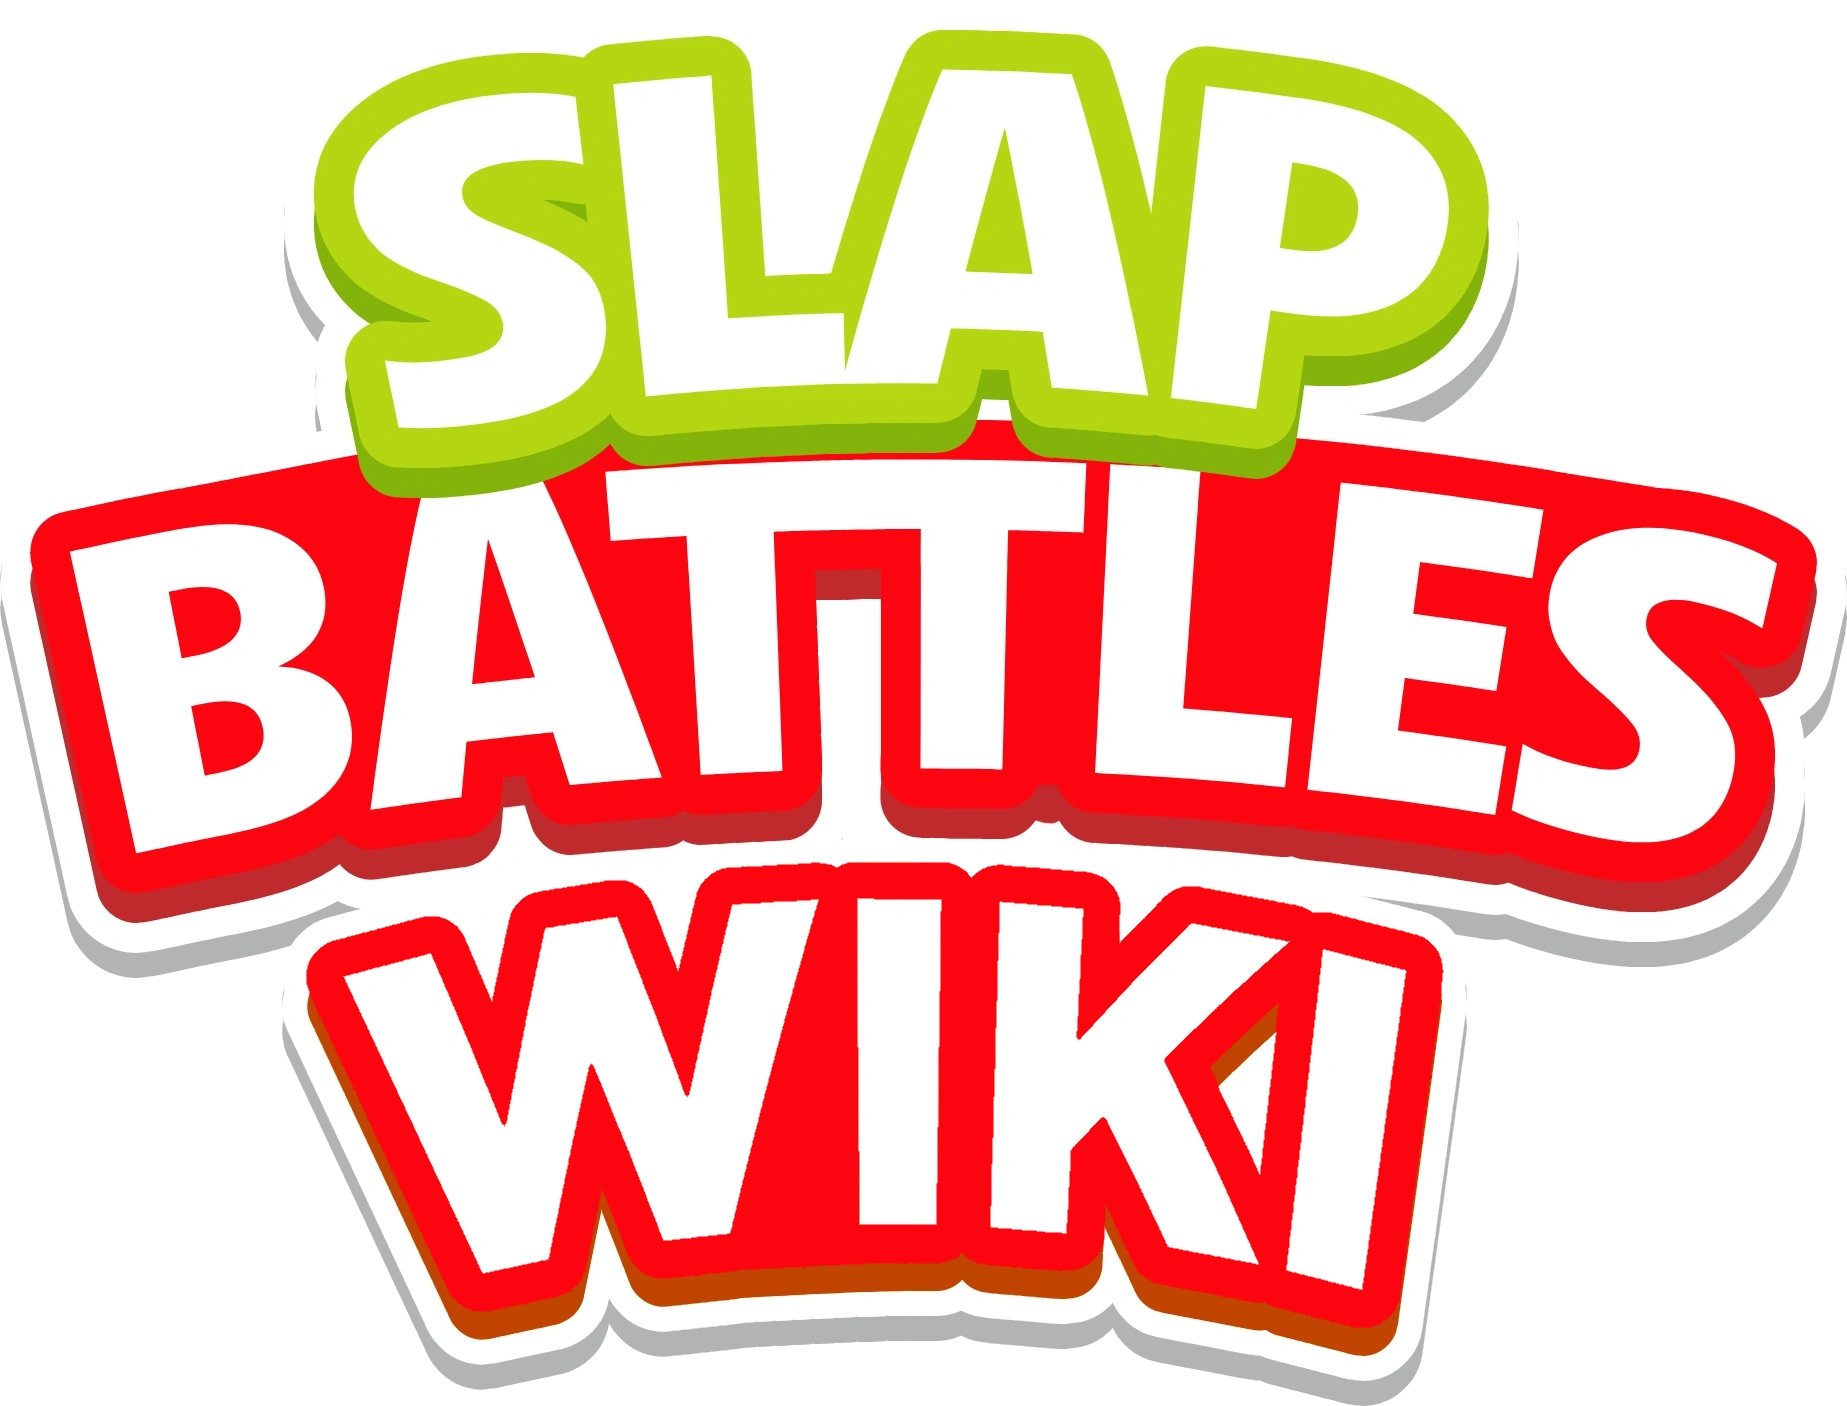 Slap Battles Wiki